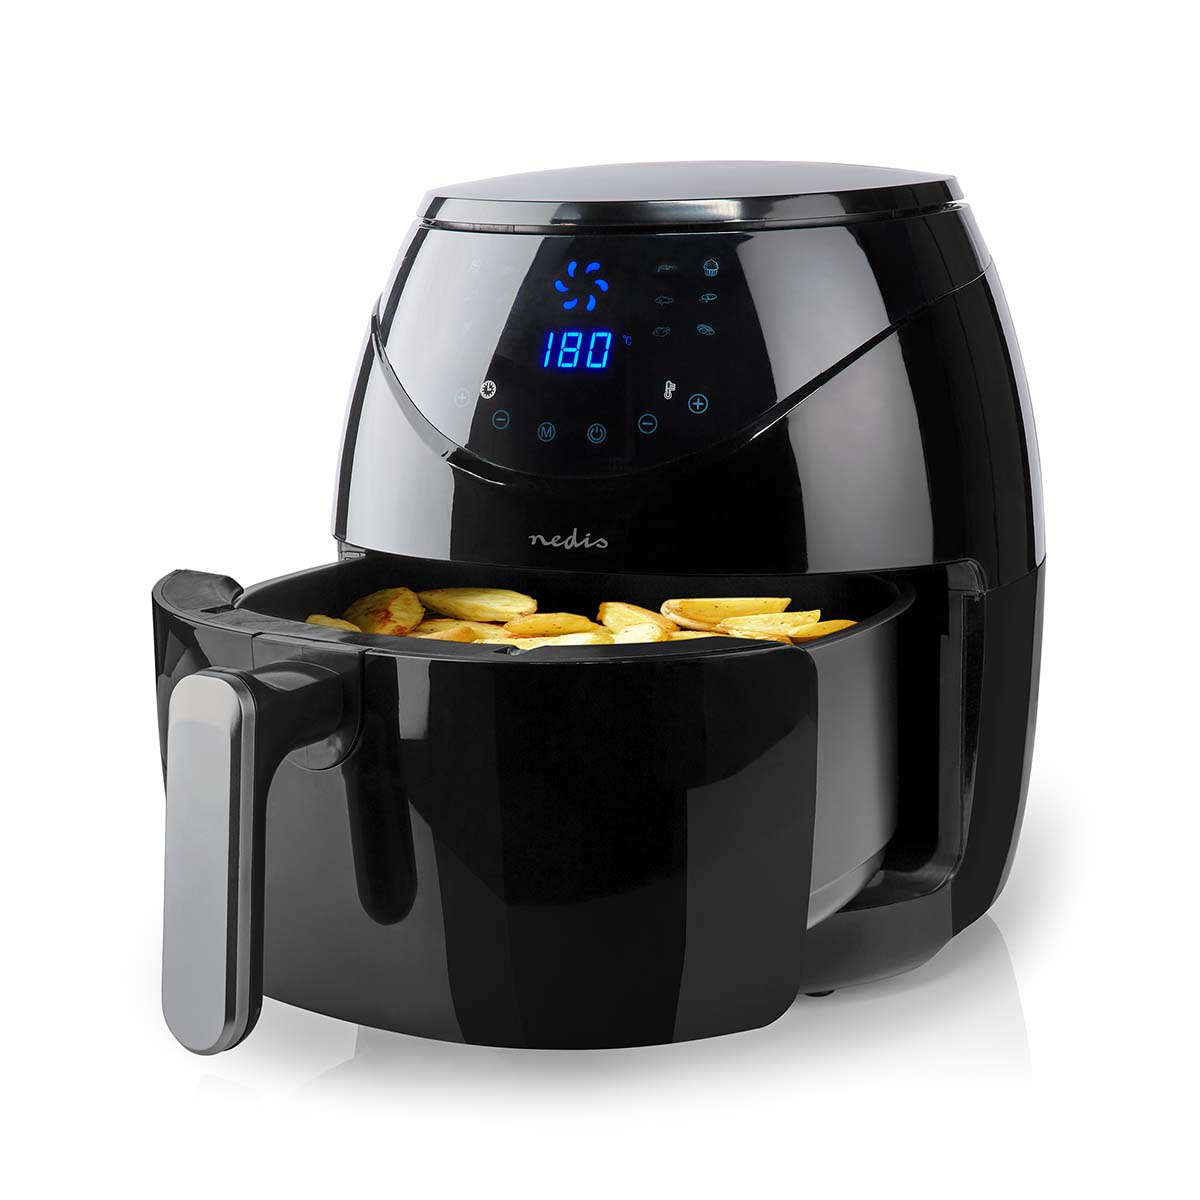 Nedis Hot Air Fryer 4.6L – Timer 60min Digital